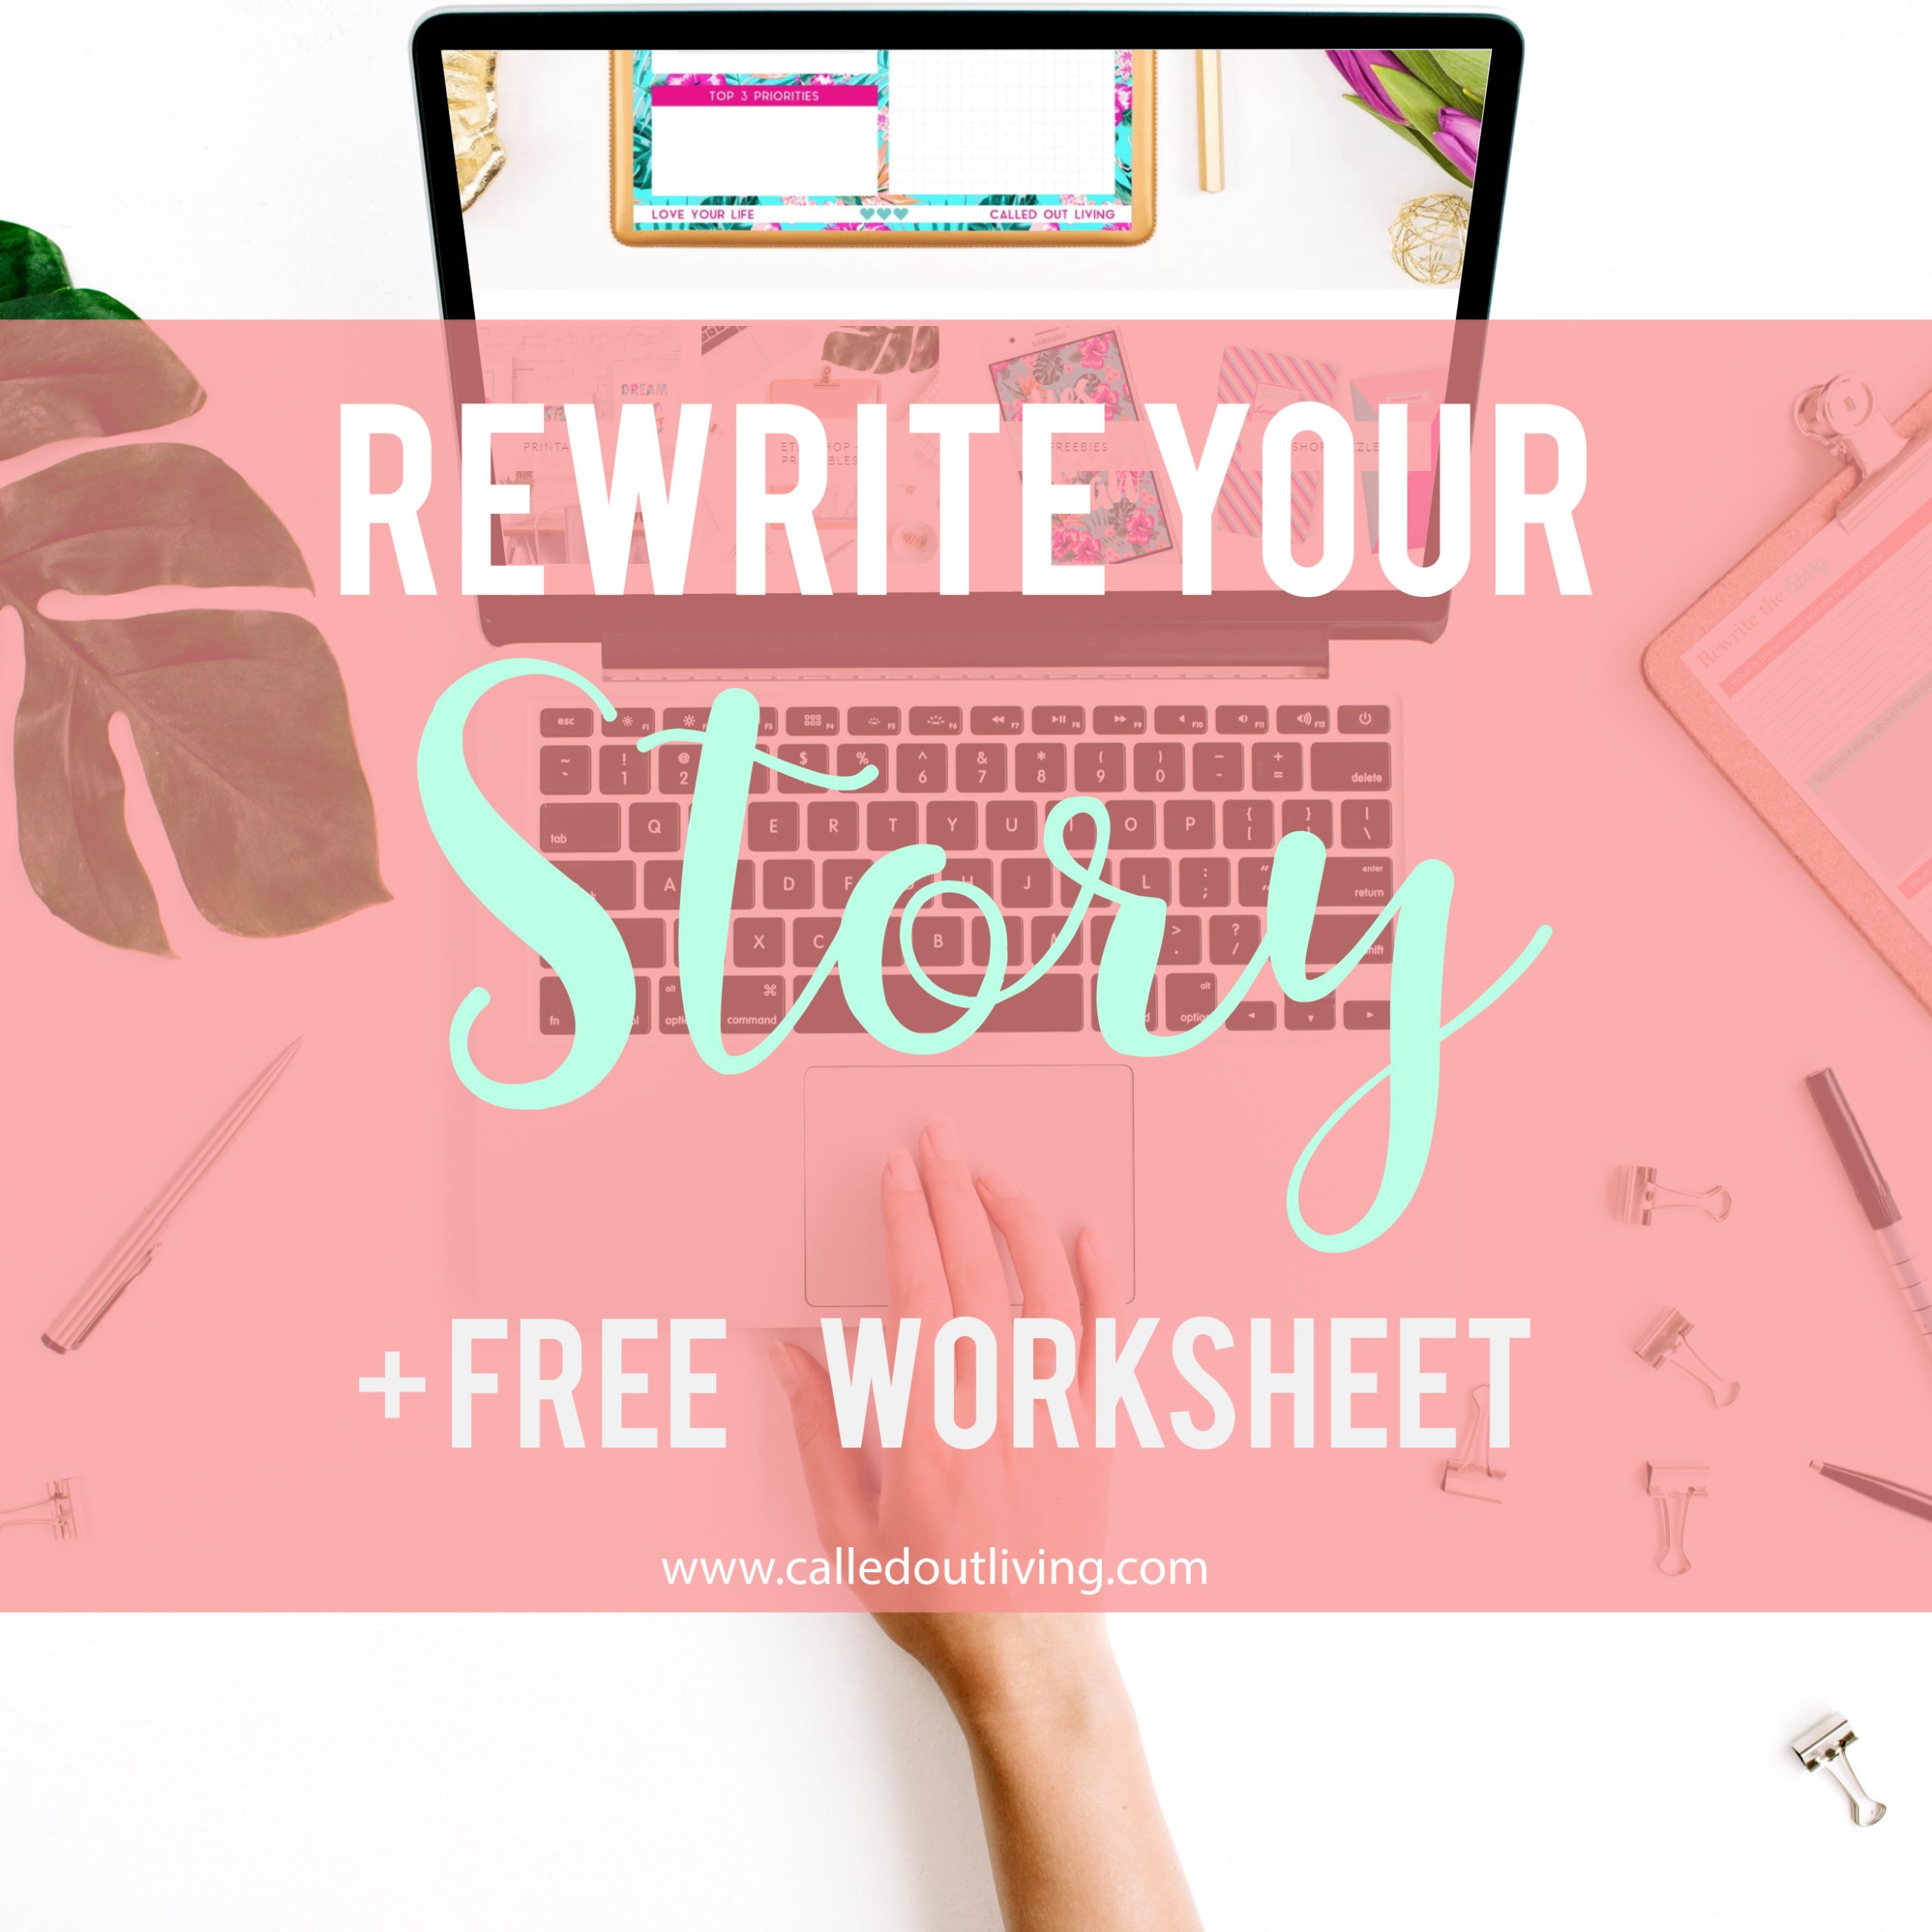 Rewrite your story worksheet free printables